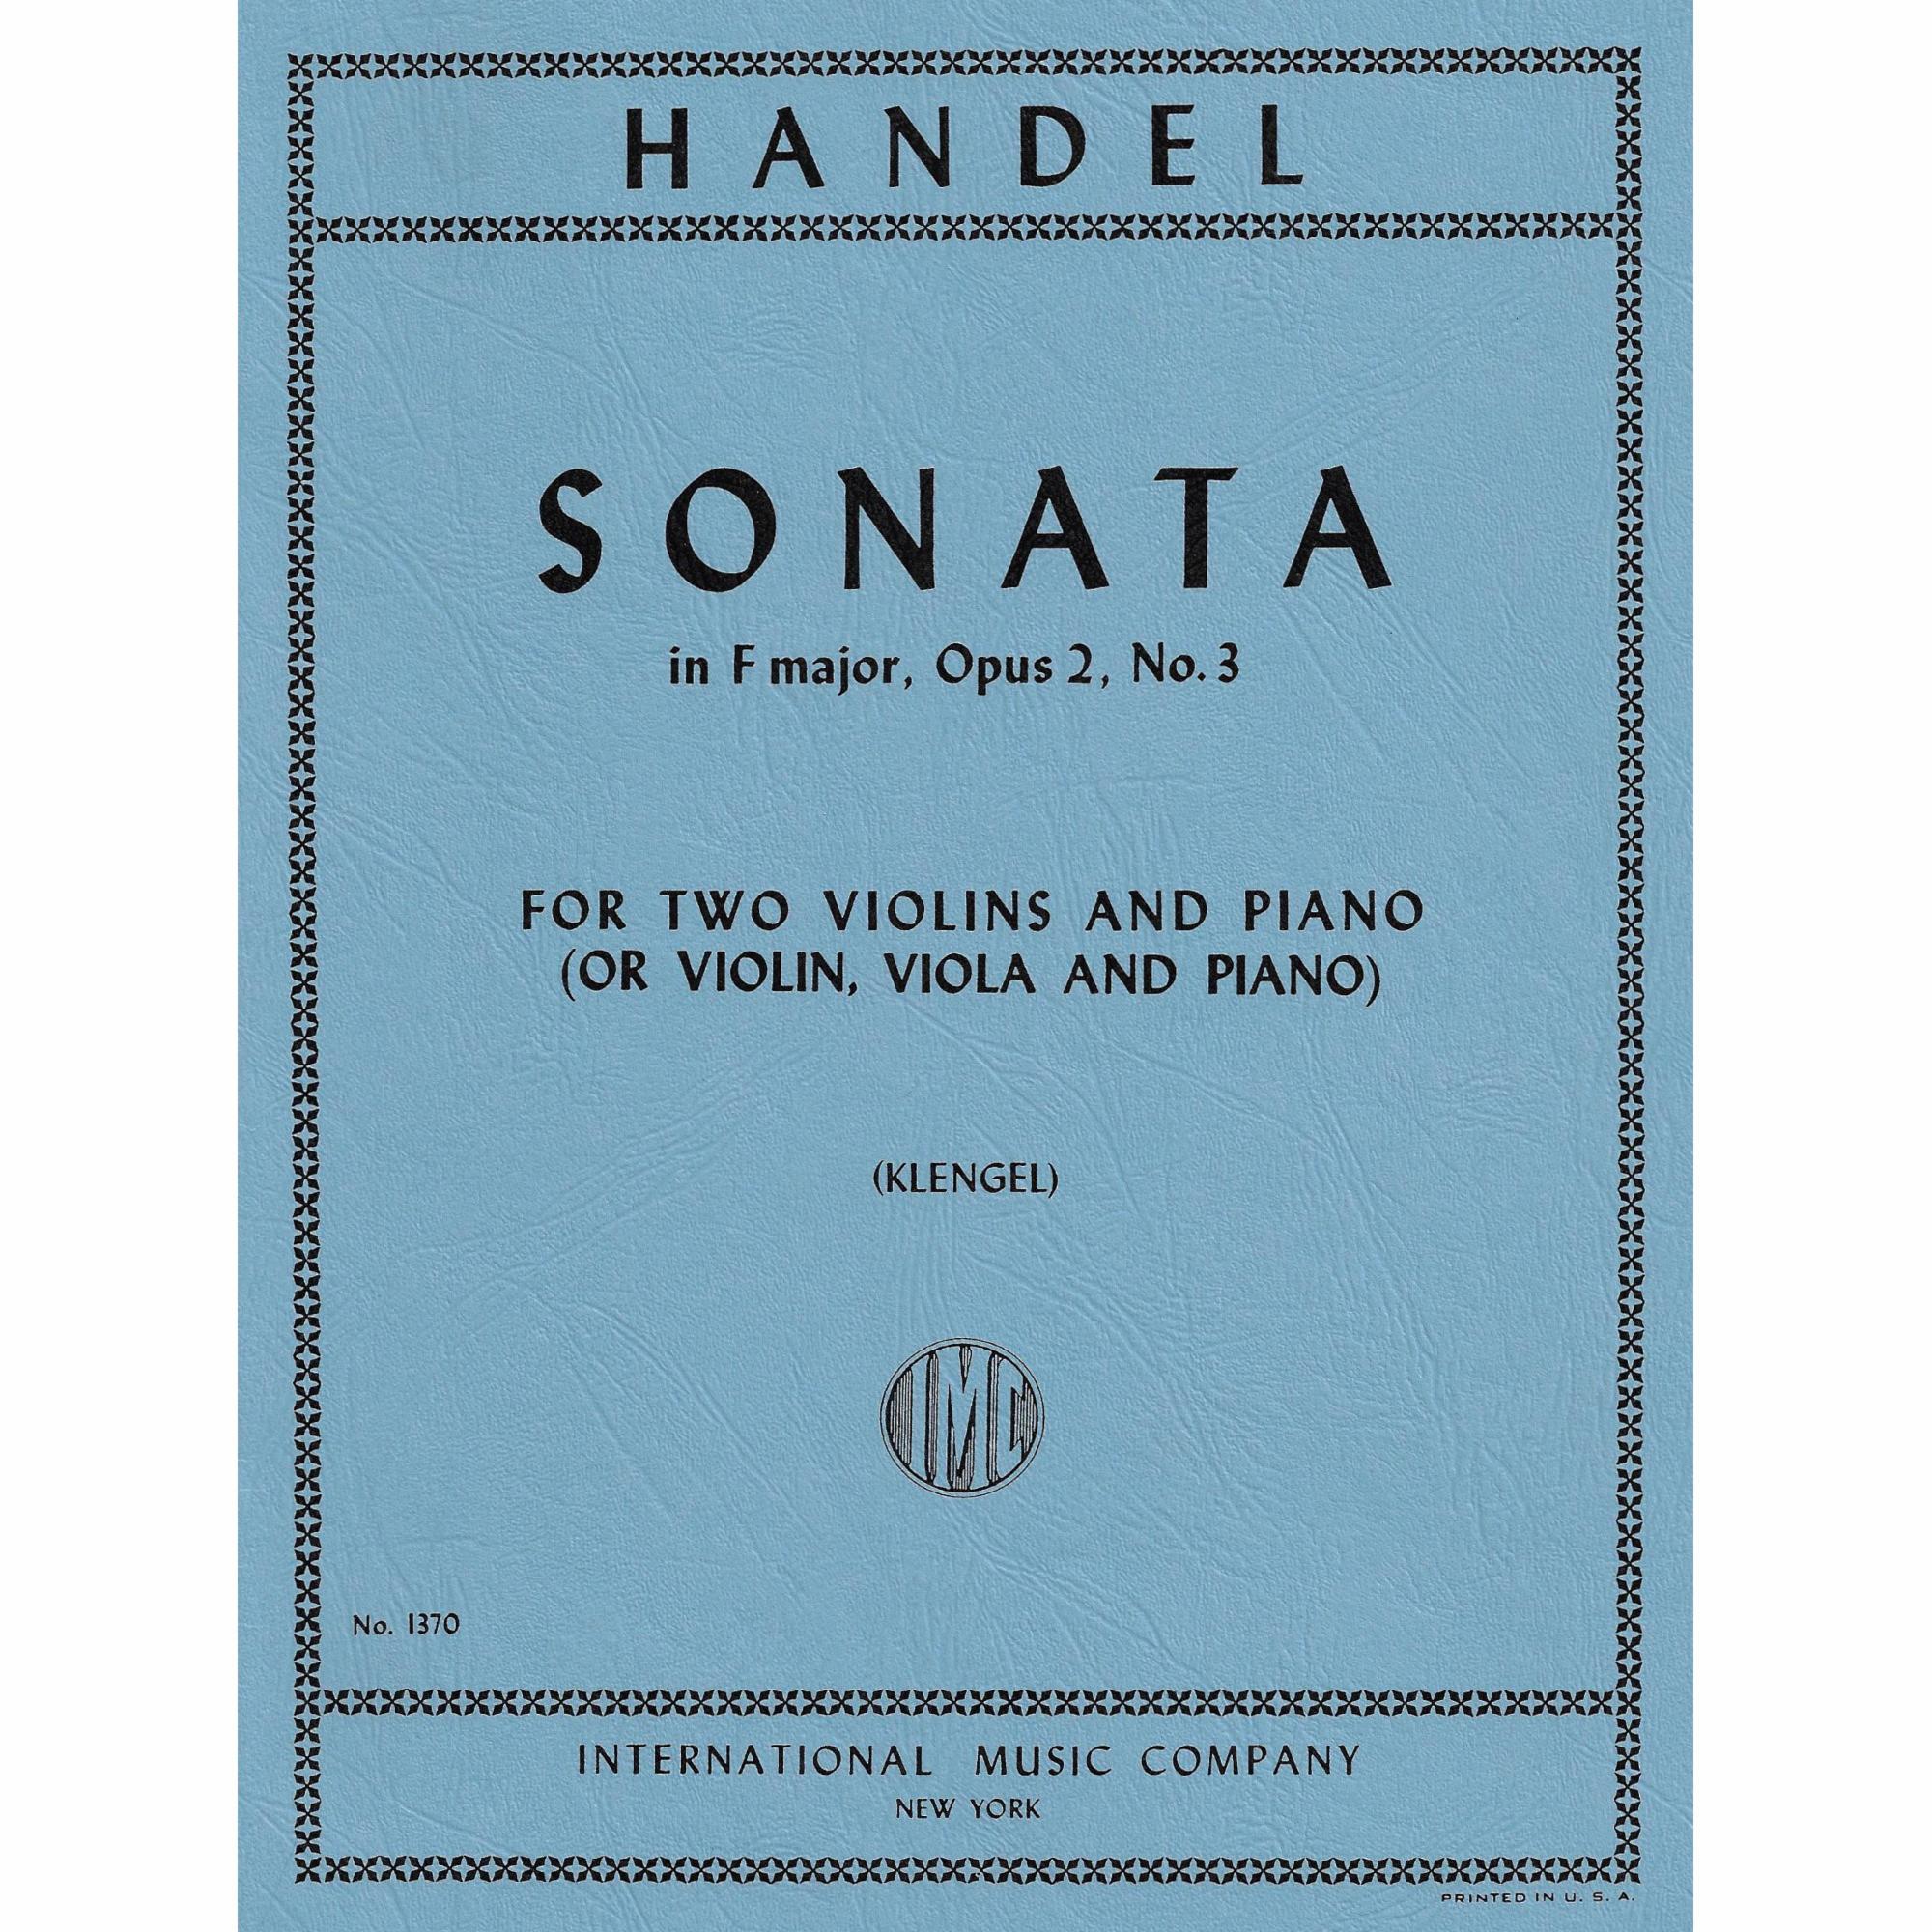 Handel -- Sonata in F Major, Op. 2, No. 3 for Two Violins (or Violin and Viola) and Piano